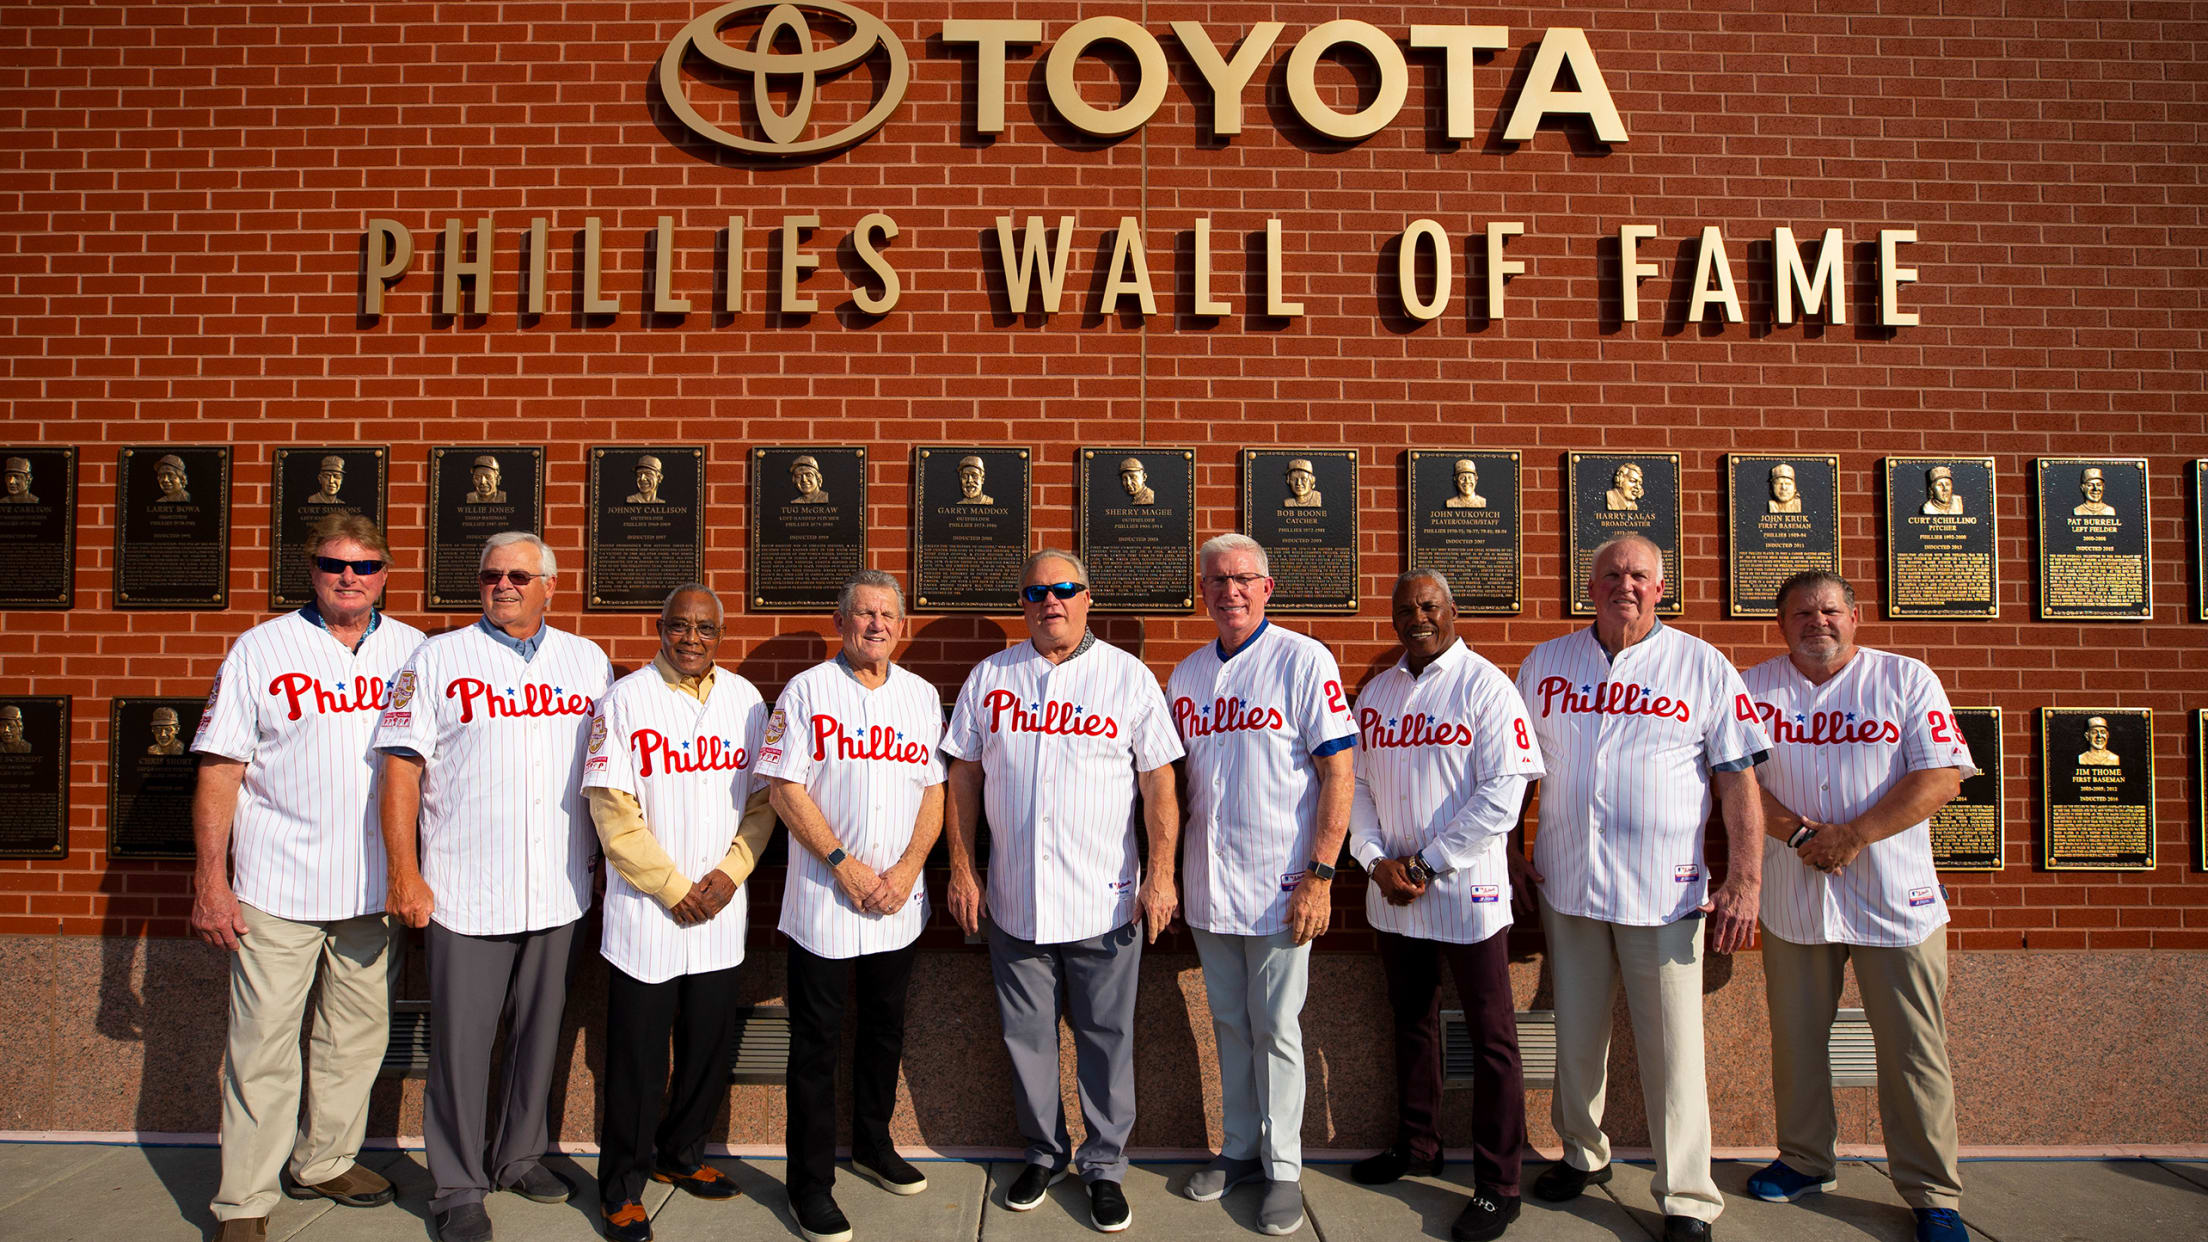 Wall of Fame Philadelphia Phillies